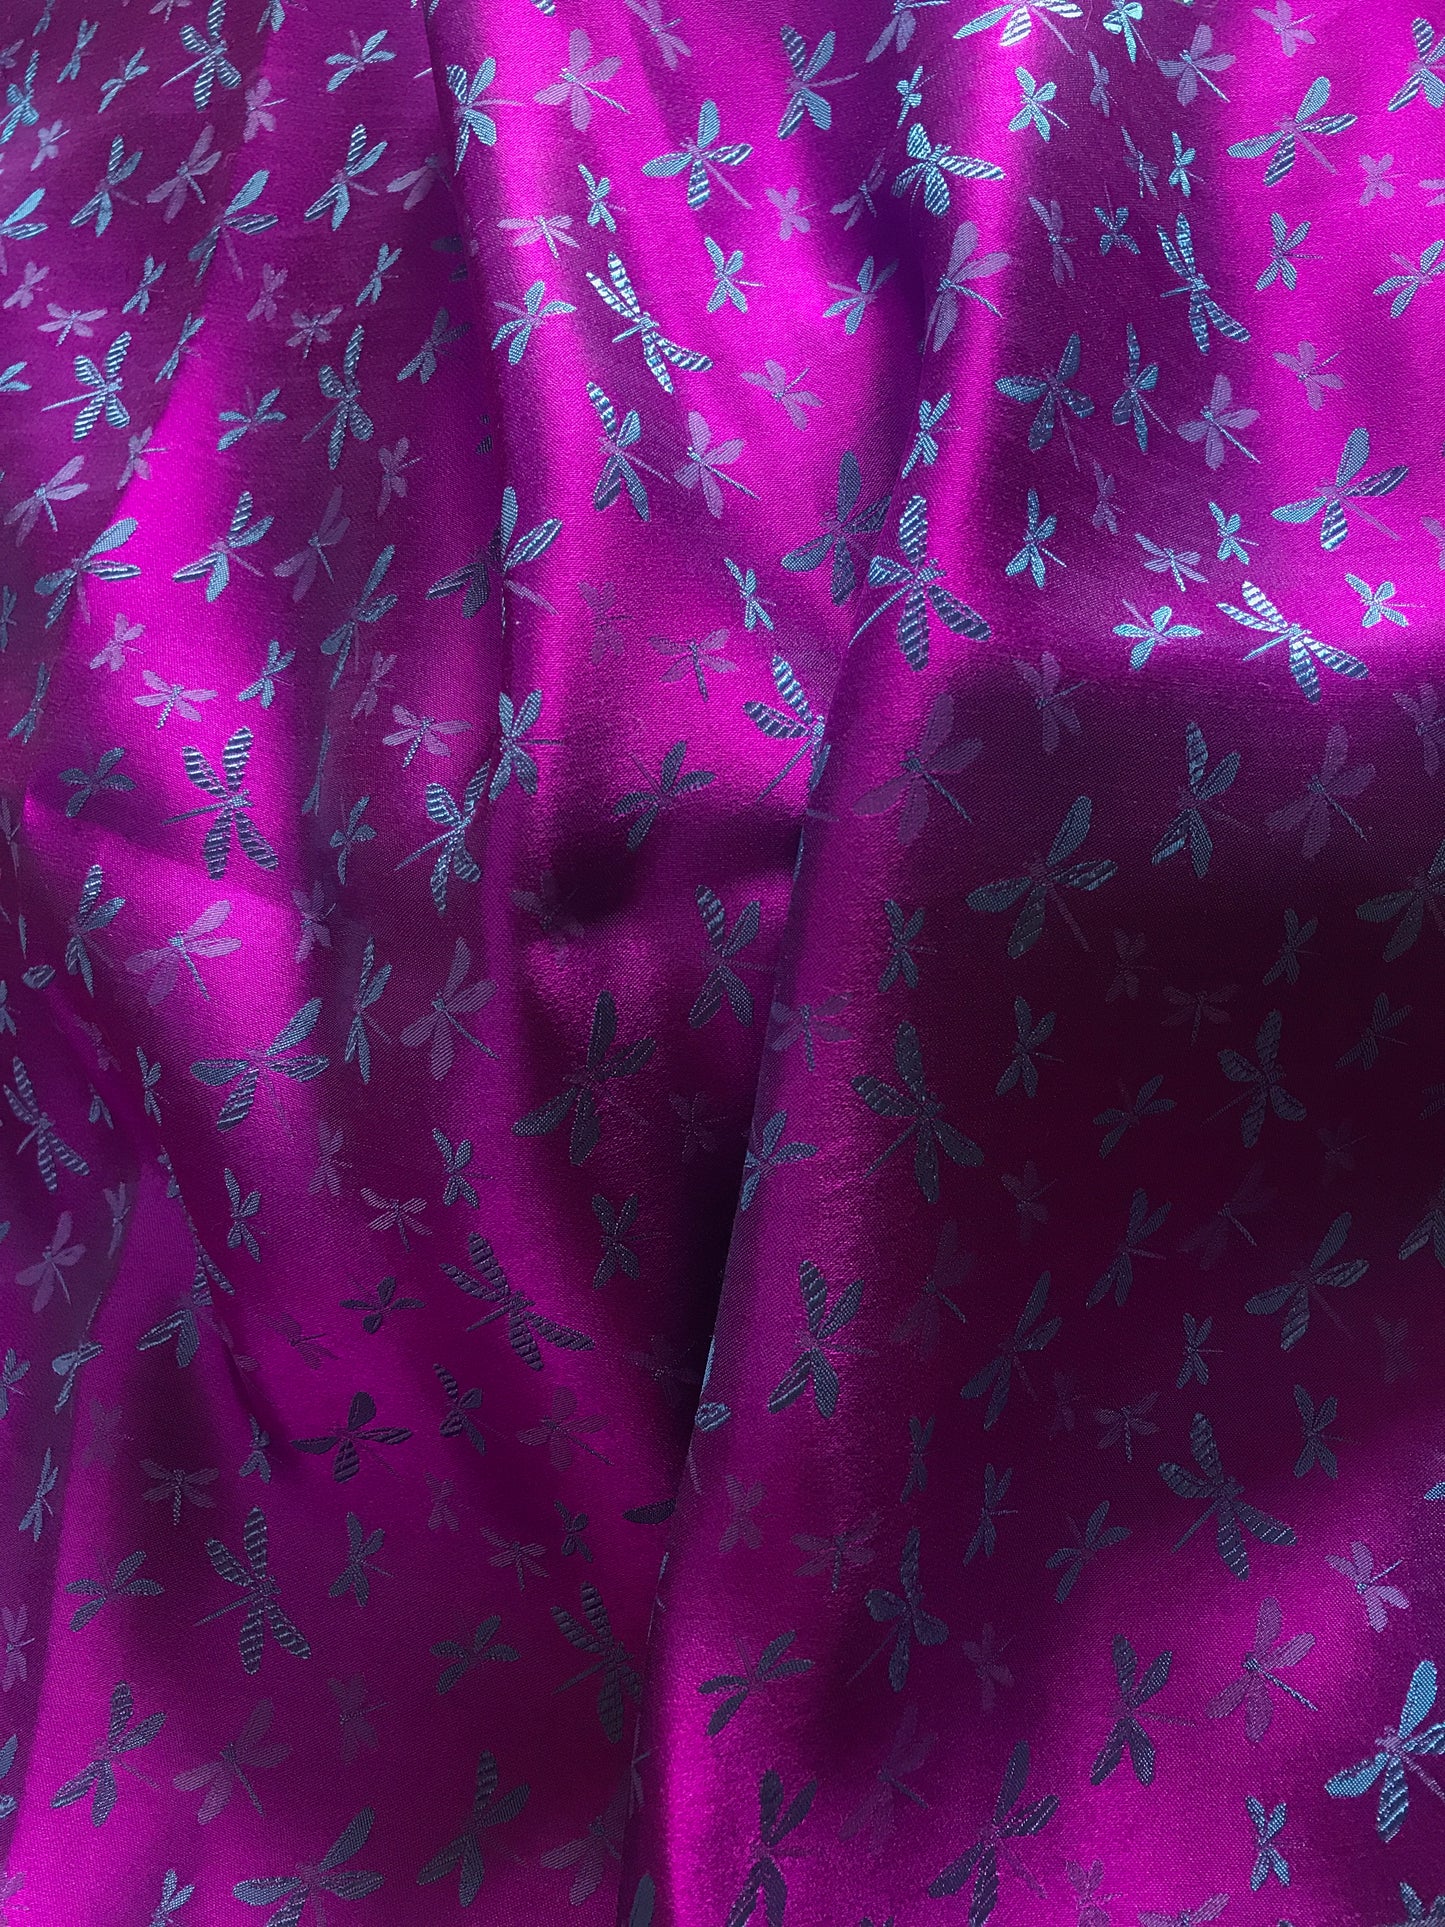 Purple silk with Navy Dragonfly patterns - PURE MULBERRY SILK fabric by the yard - Gragonfly silk -Luxury Silk - Natural silk - Handmade in VietNam